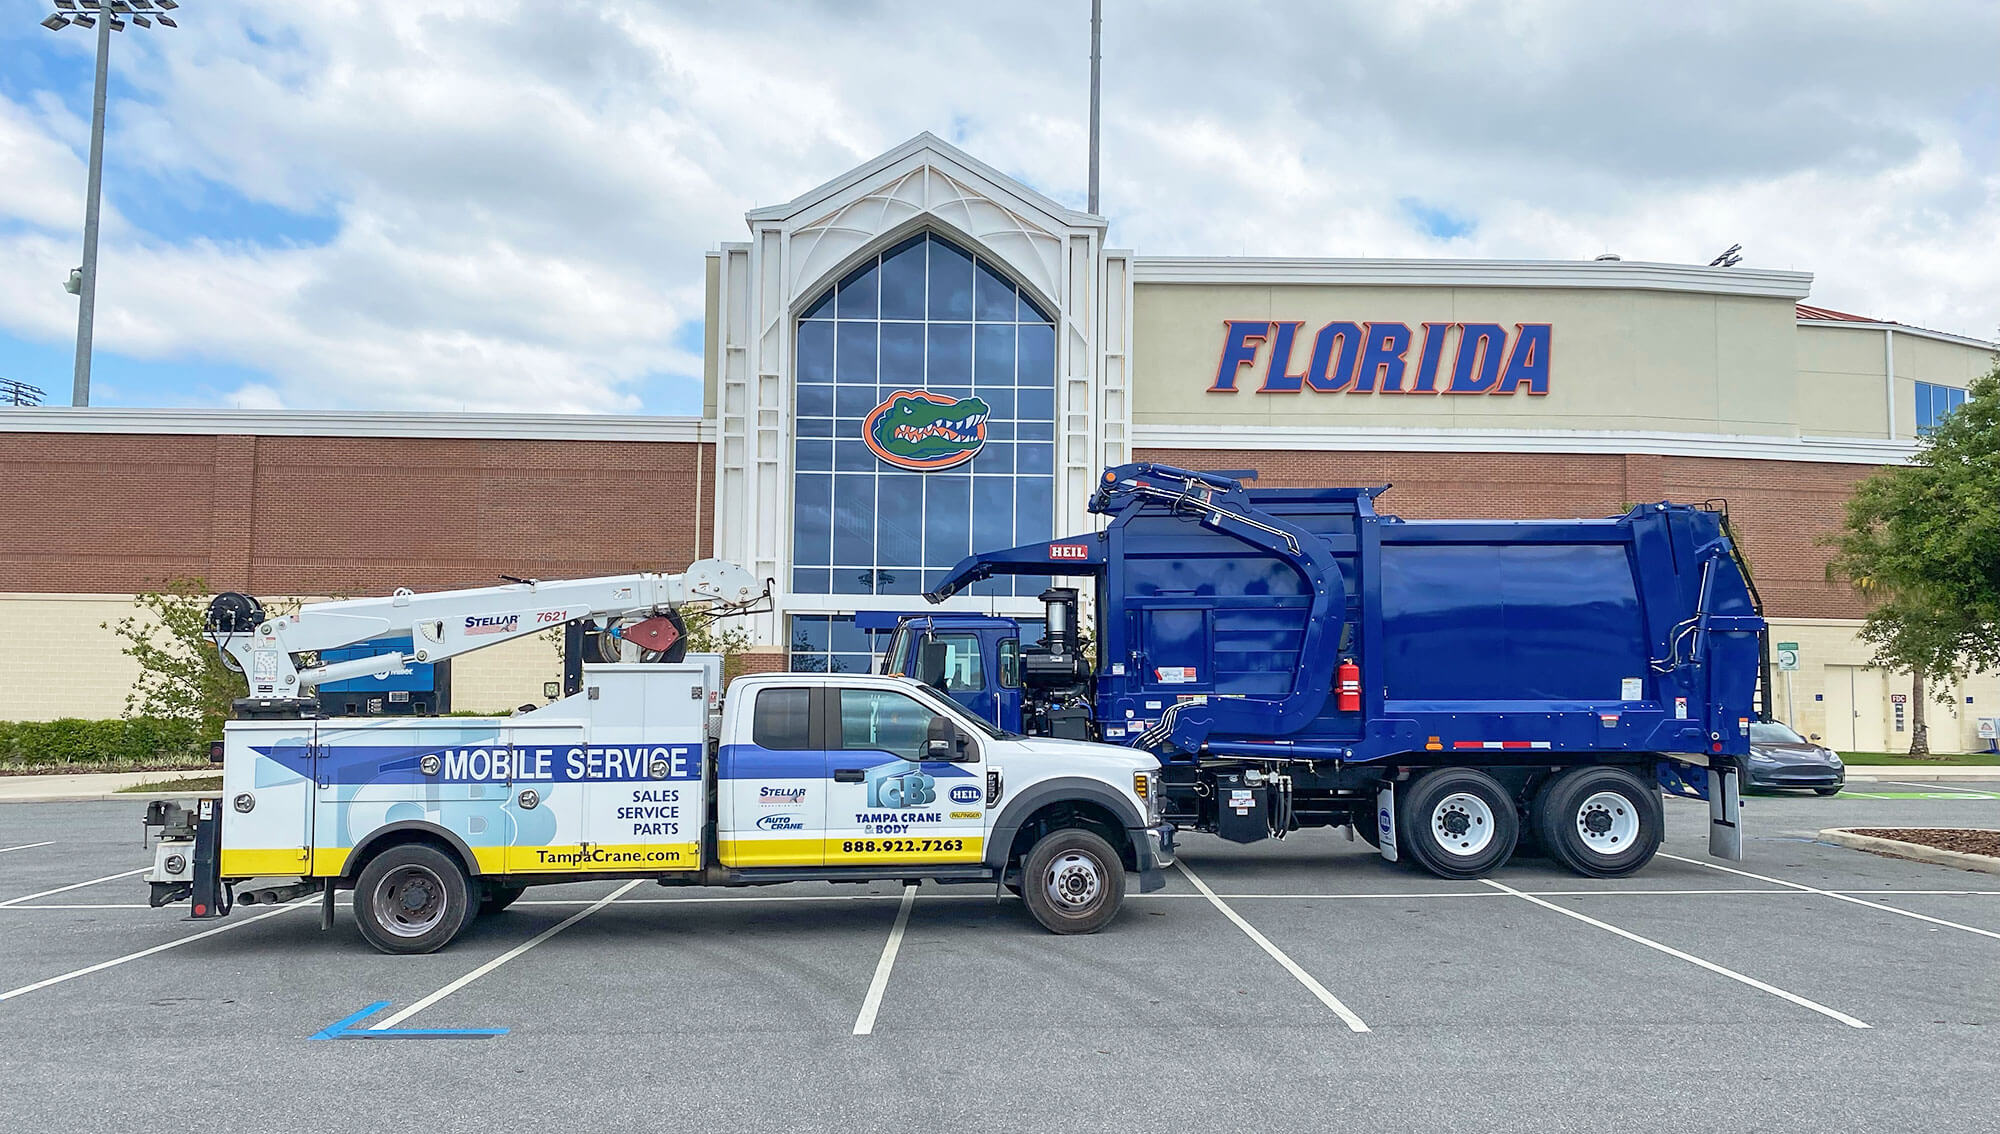 University of Florida garbage truck from Tampa Crane